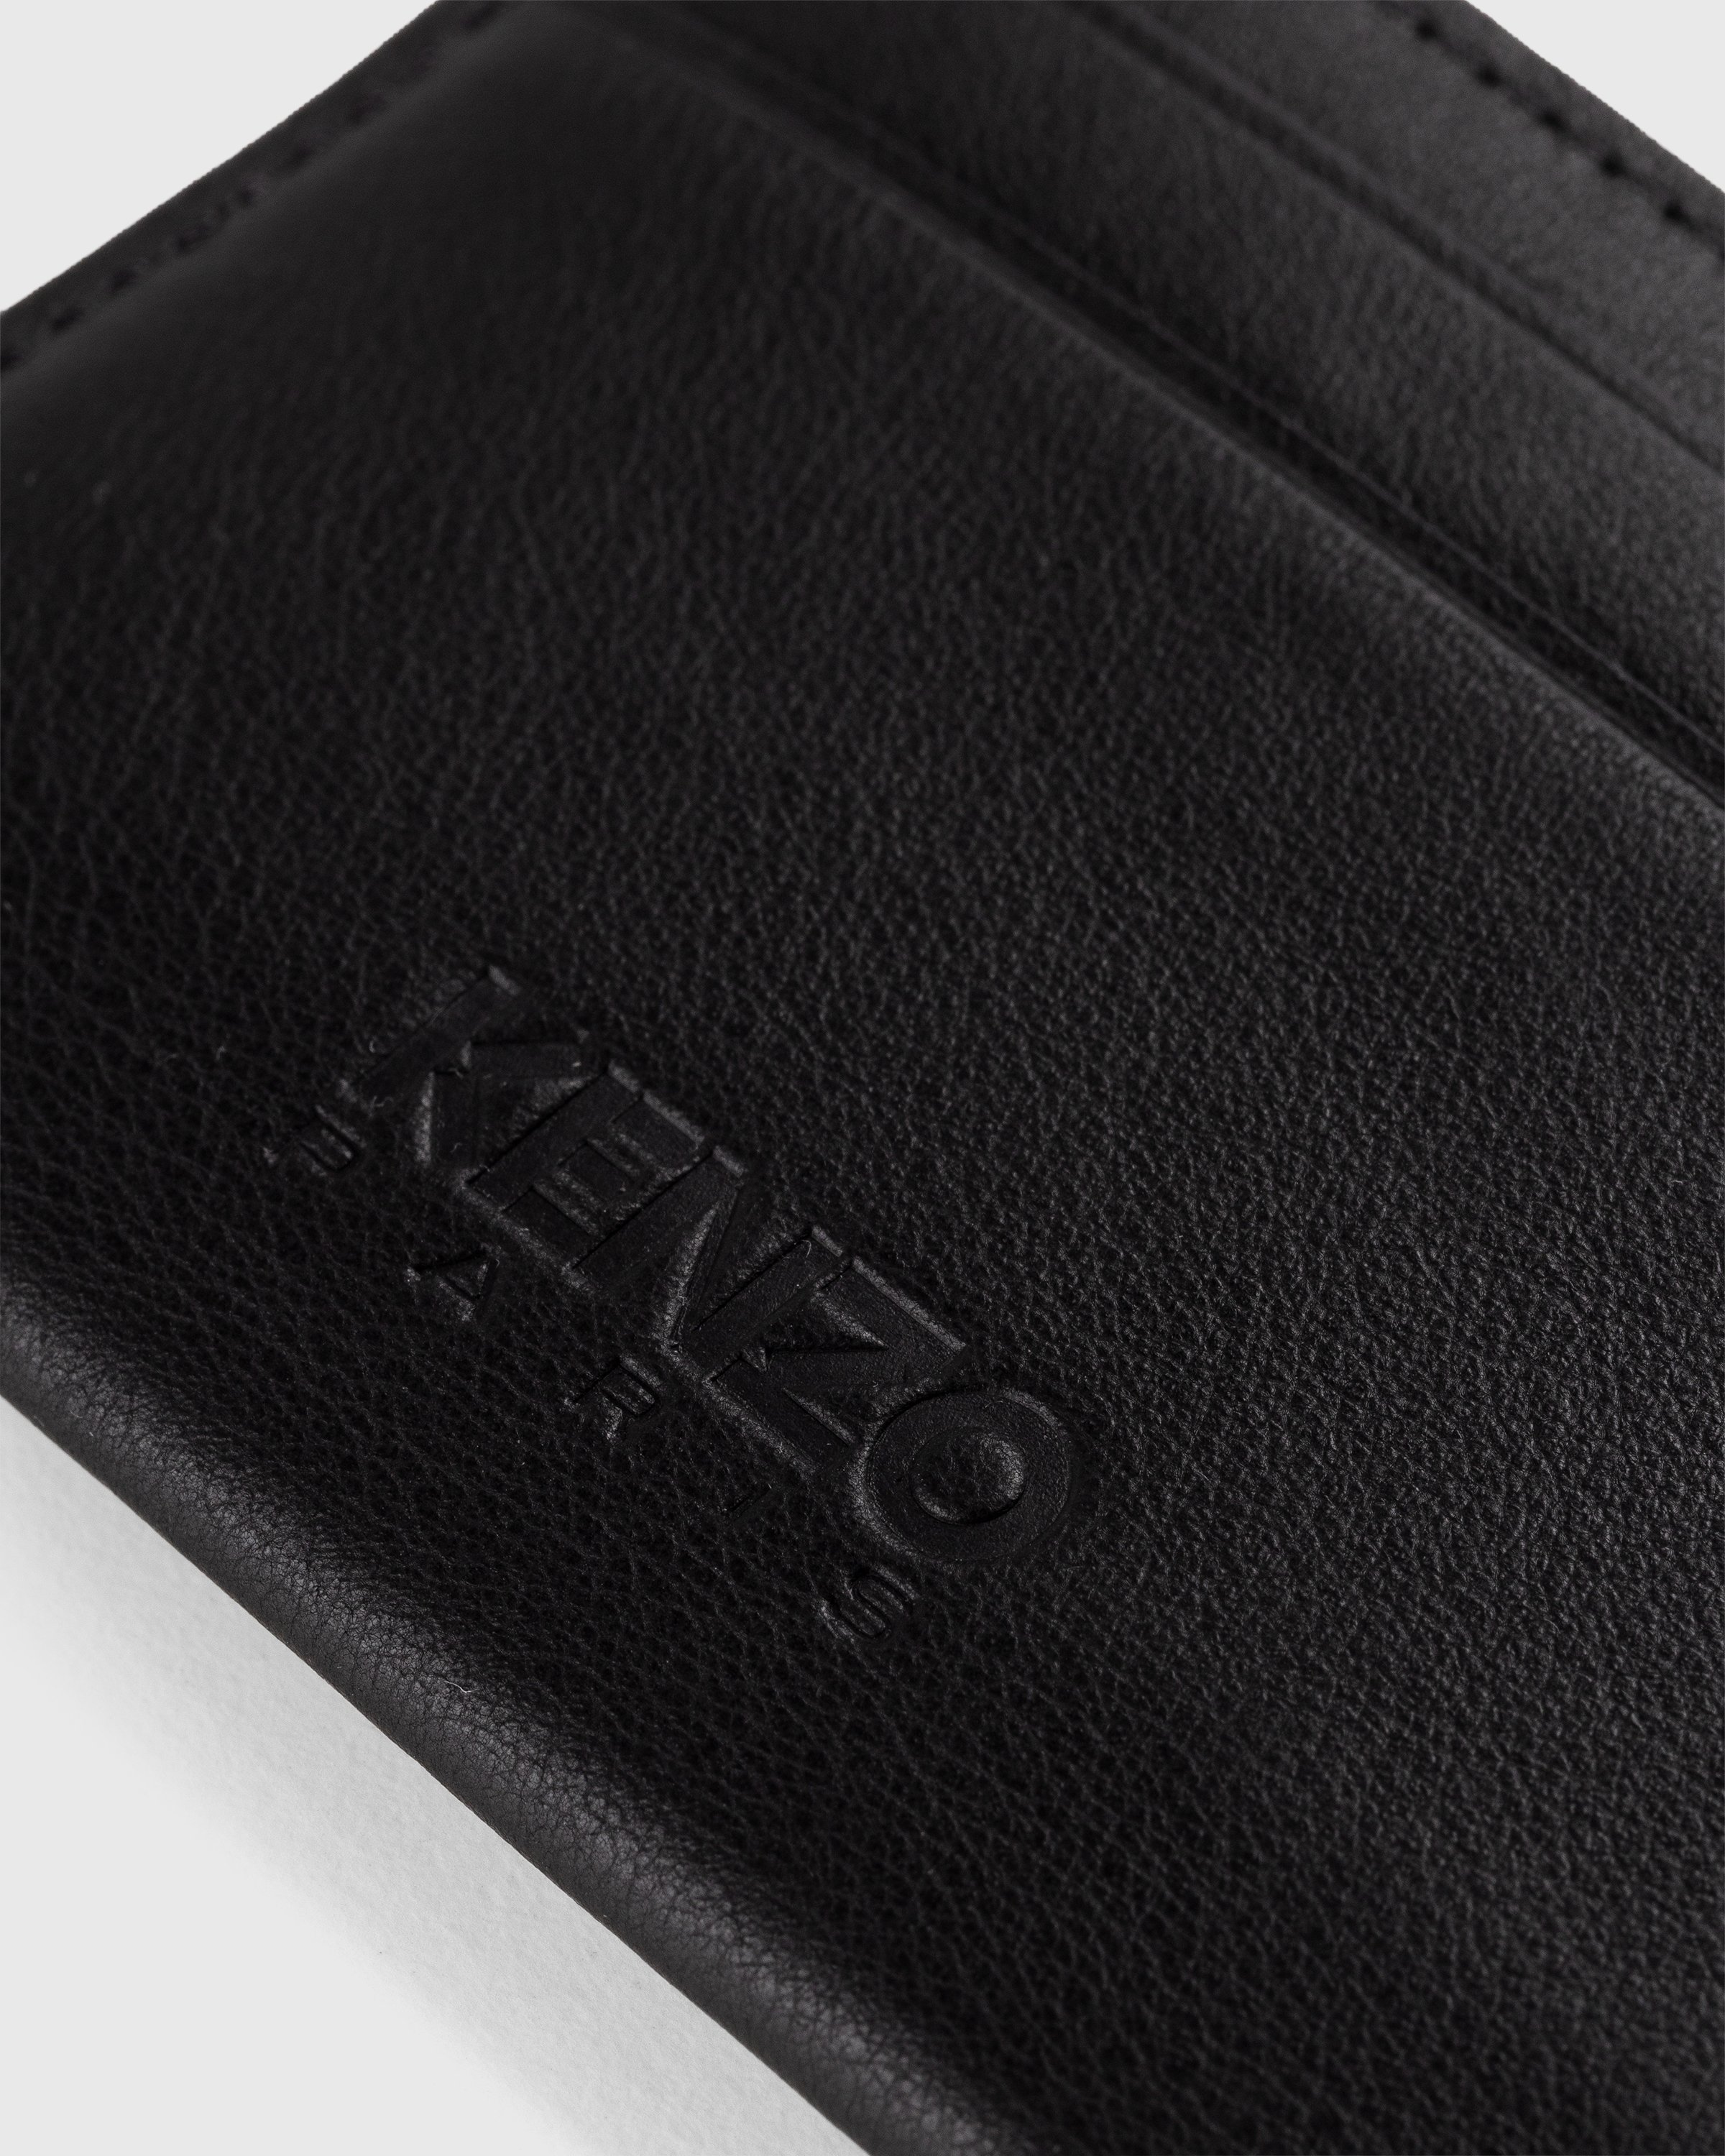 Kenzo - Crest Cardholder Black - Accessories - Black - Image 5